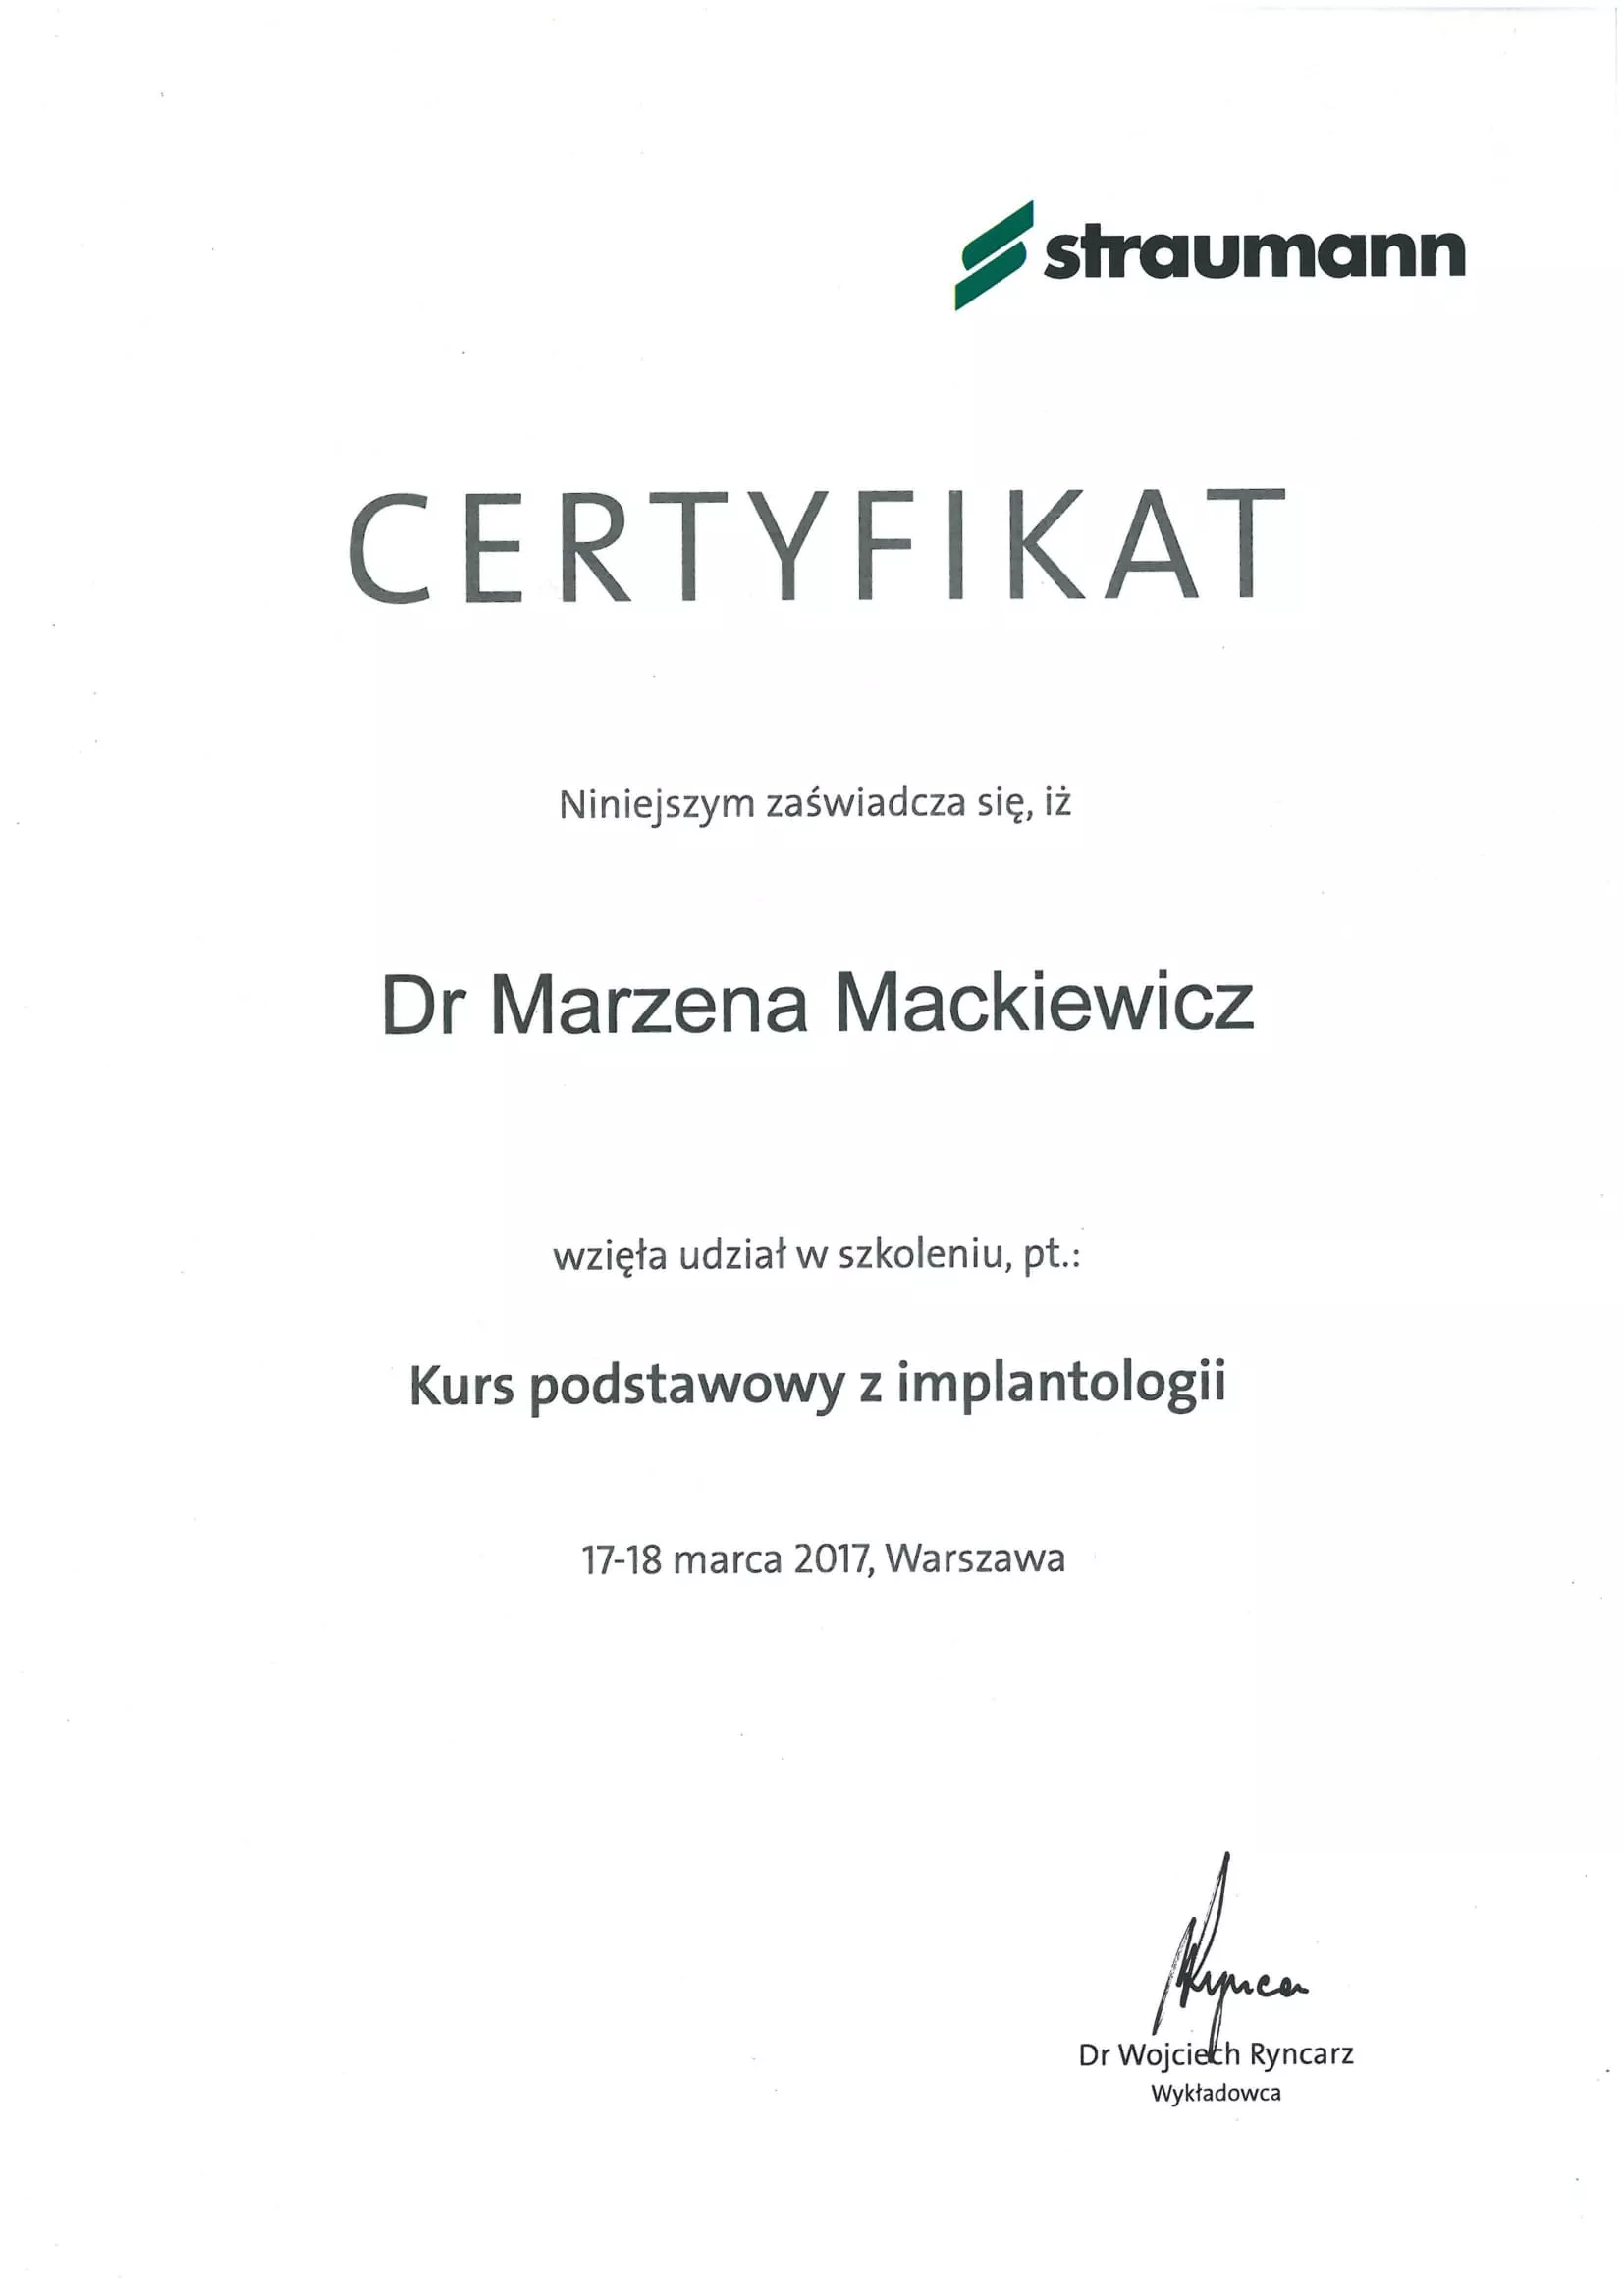 <span>Marzena Mackiewicz</span><br/>lekarz stomatolog Stomatolog Tatra-Med Zakopane